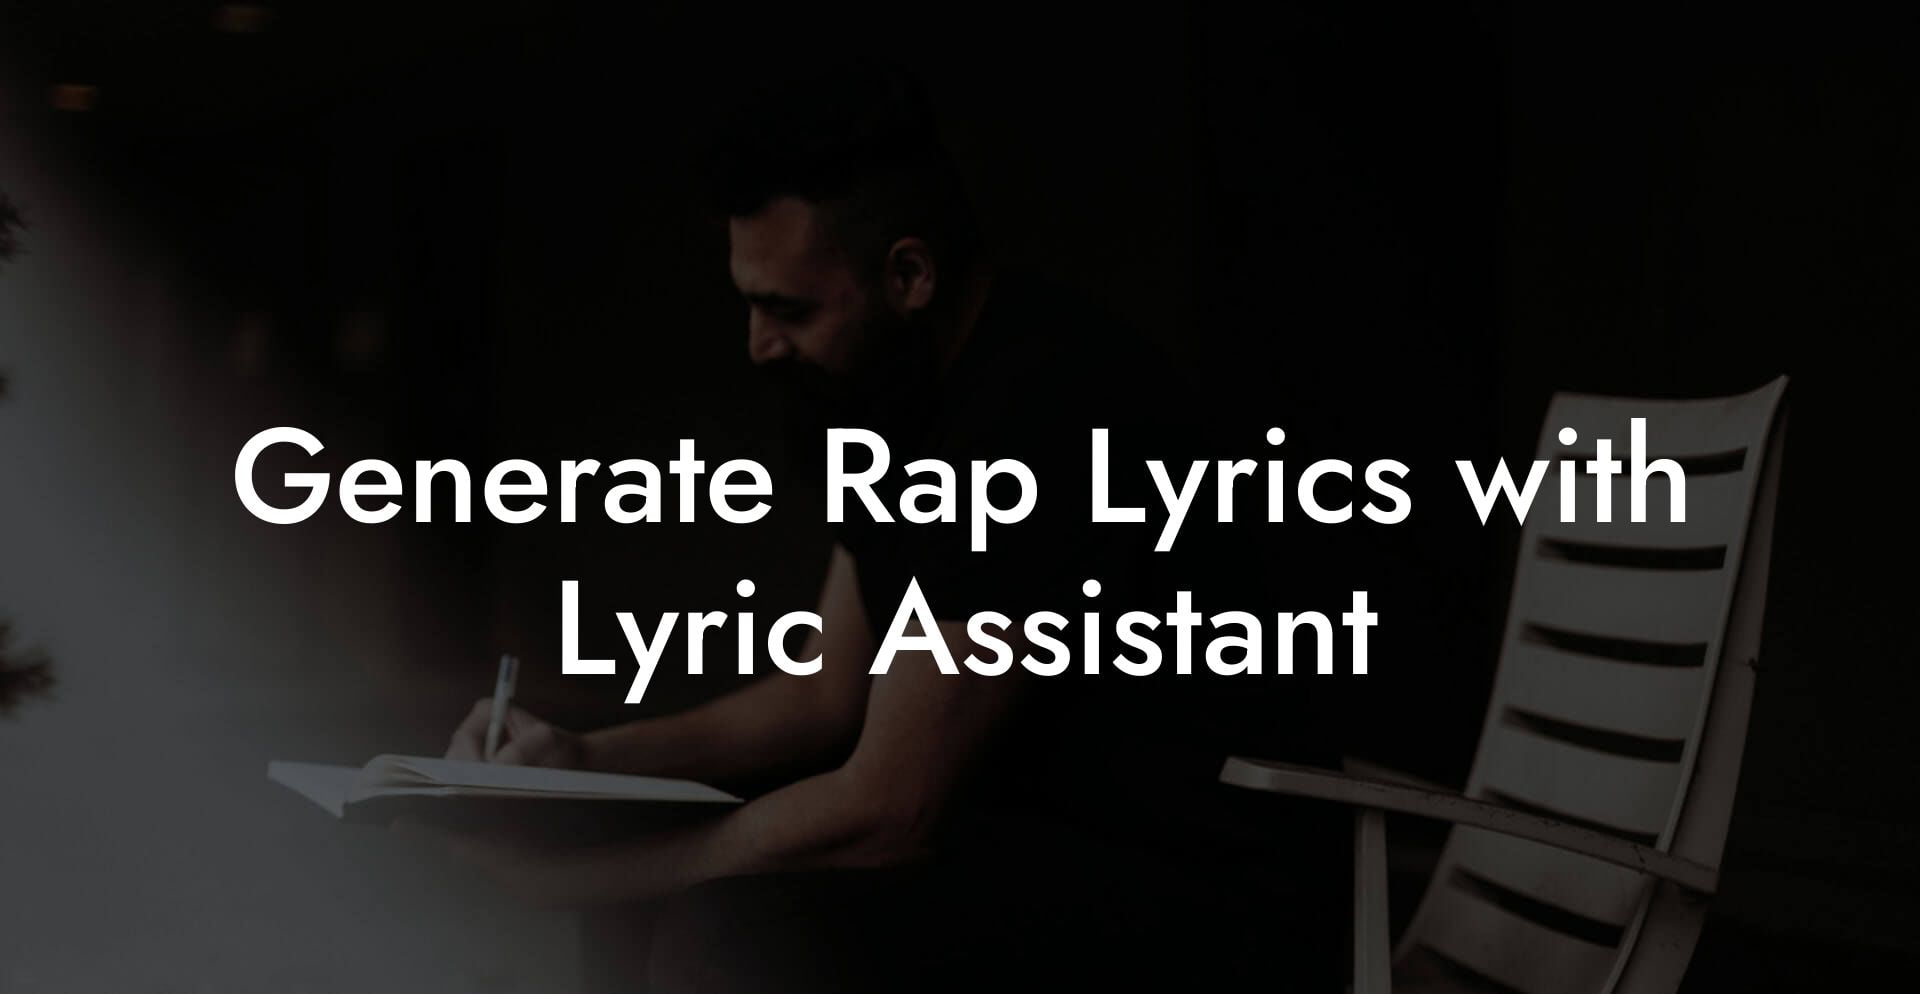 generate rap lyrics with lyric assistant lyric assistant